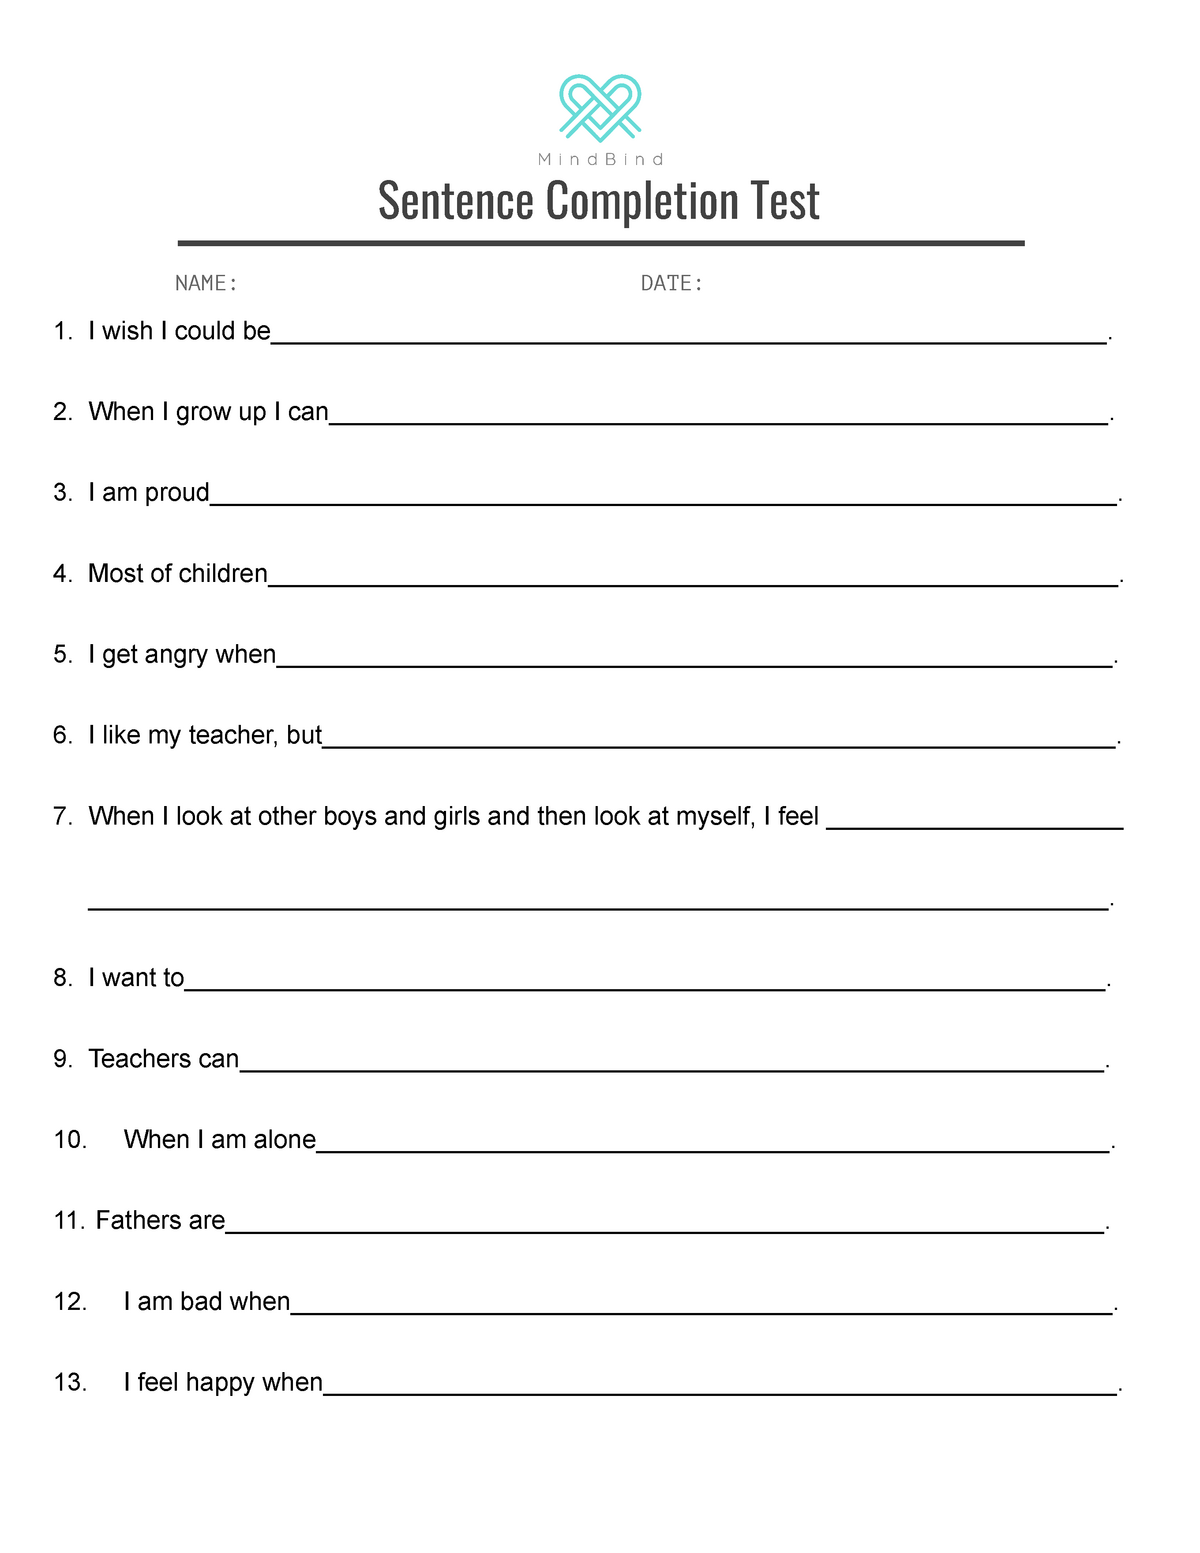 sentence-completion-test-adolescent-sentence-completion-test-name